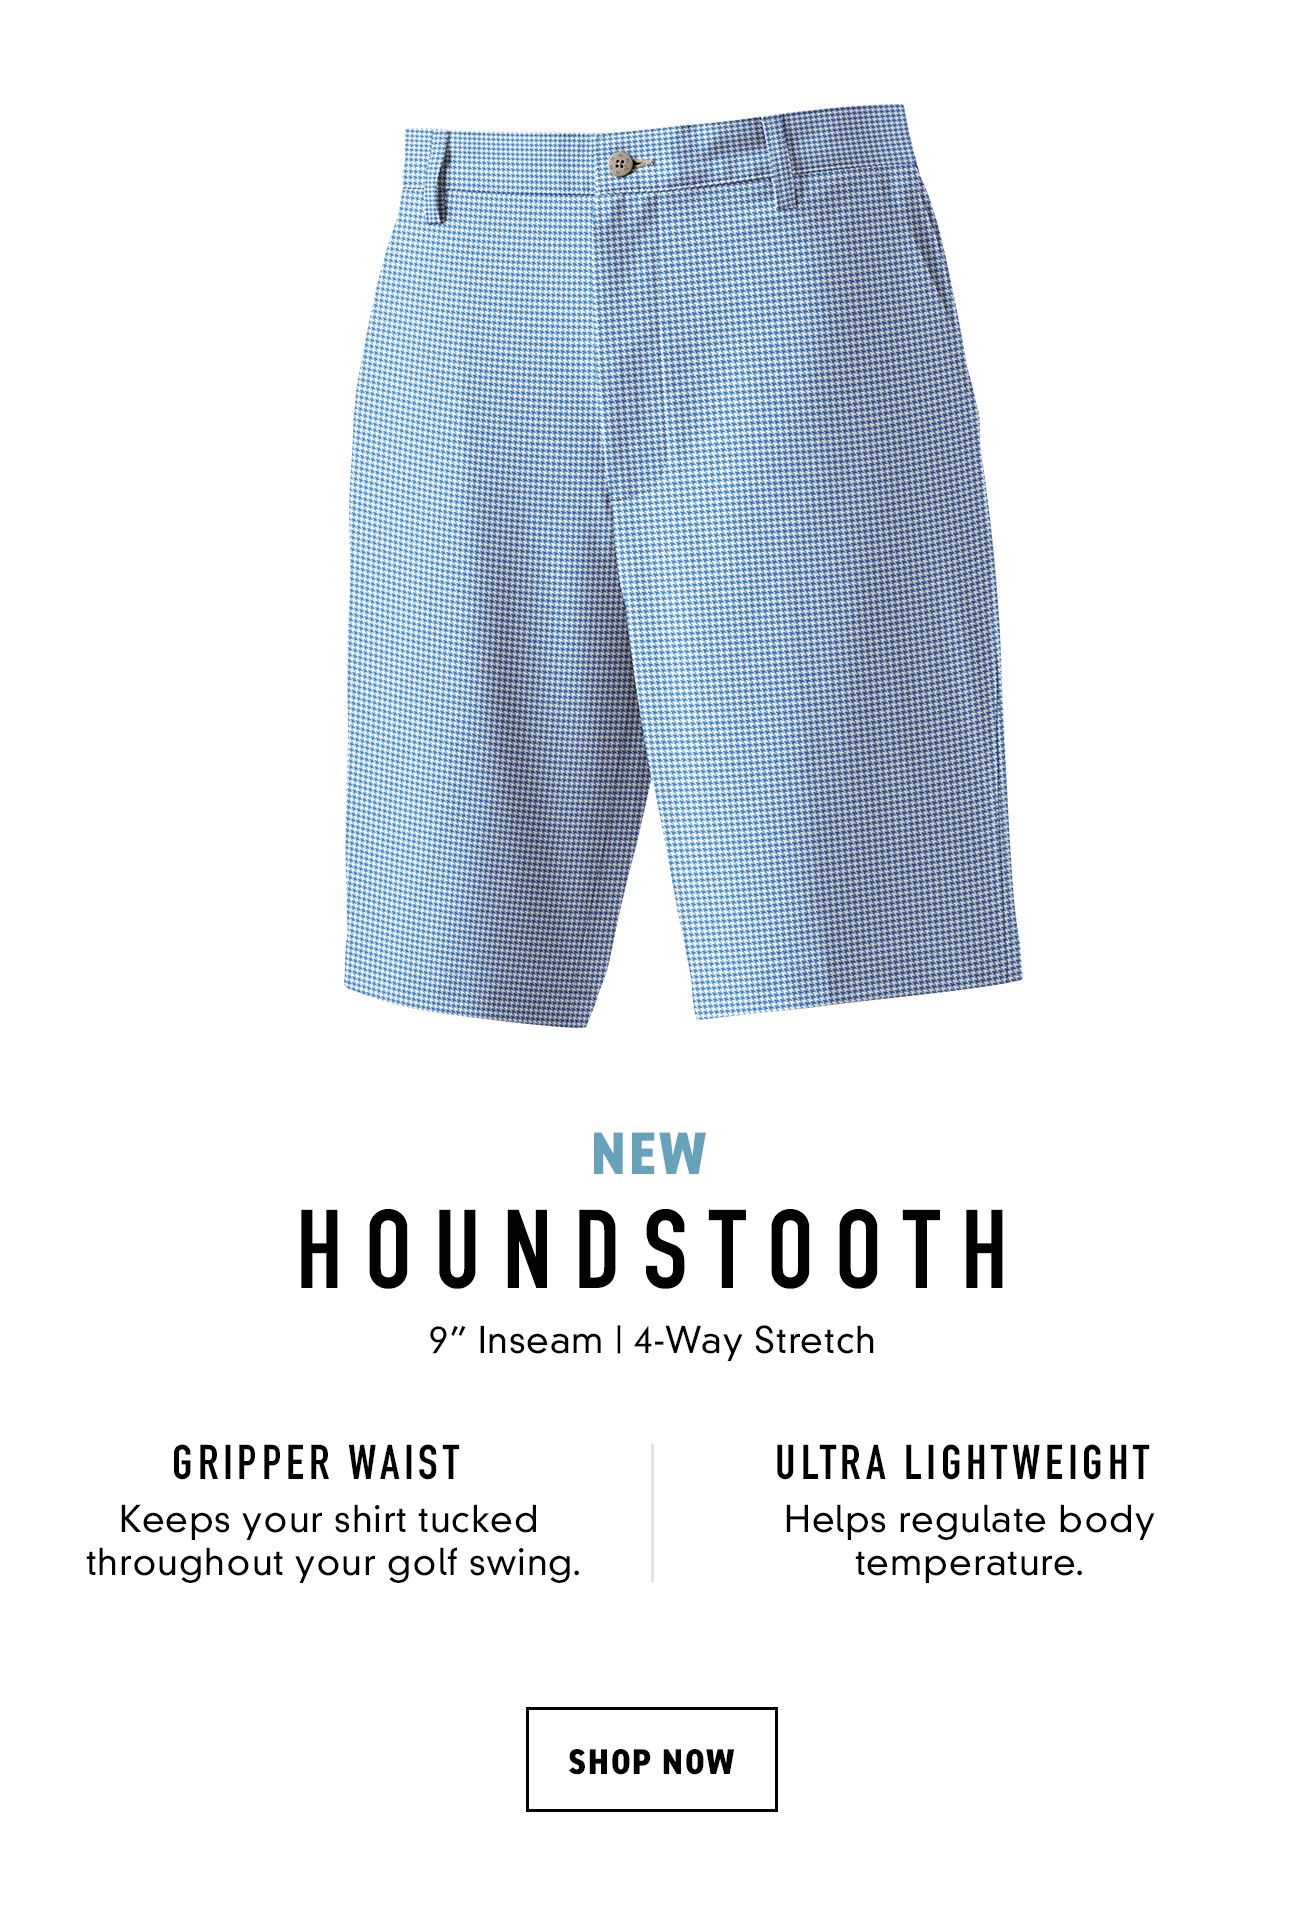 footjoy houndstooth shorts